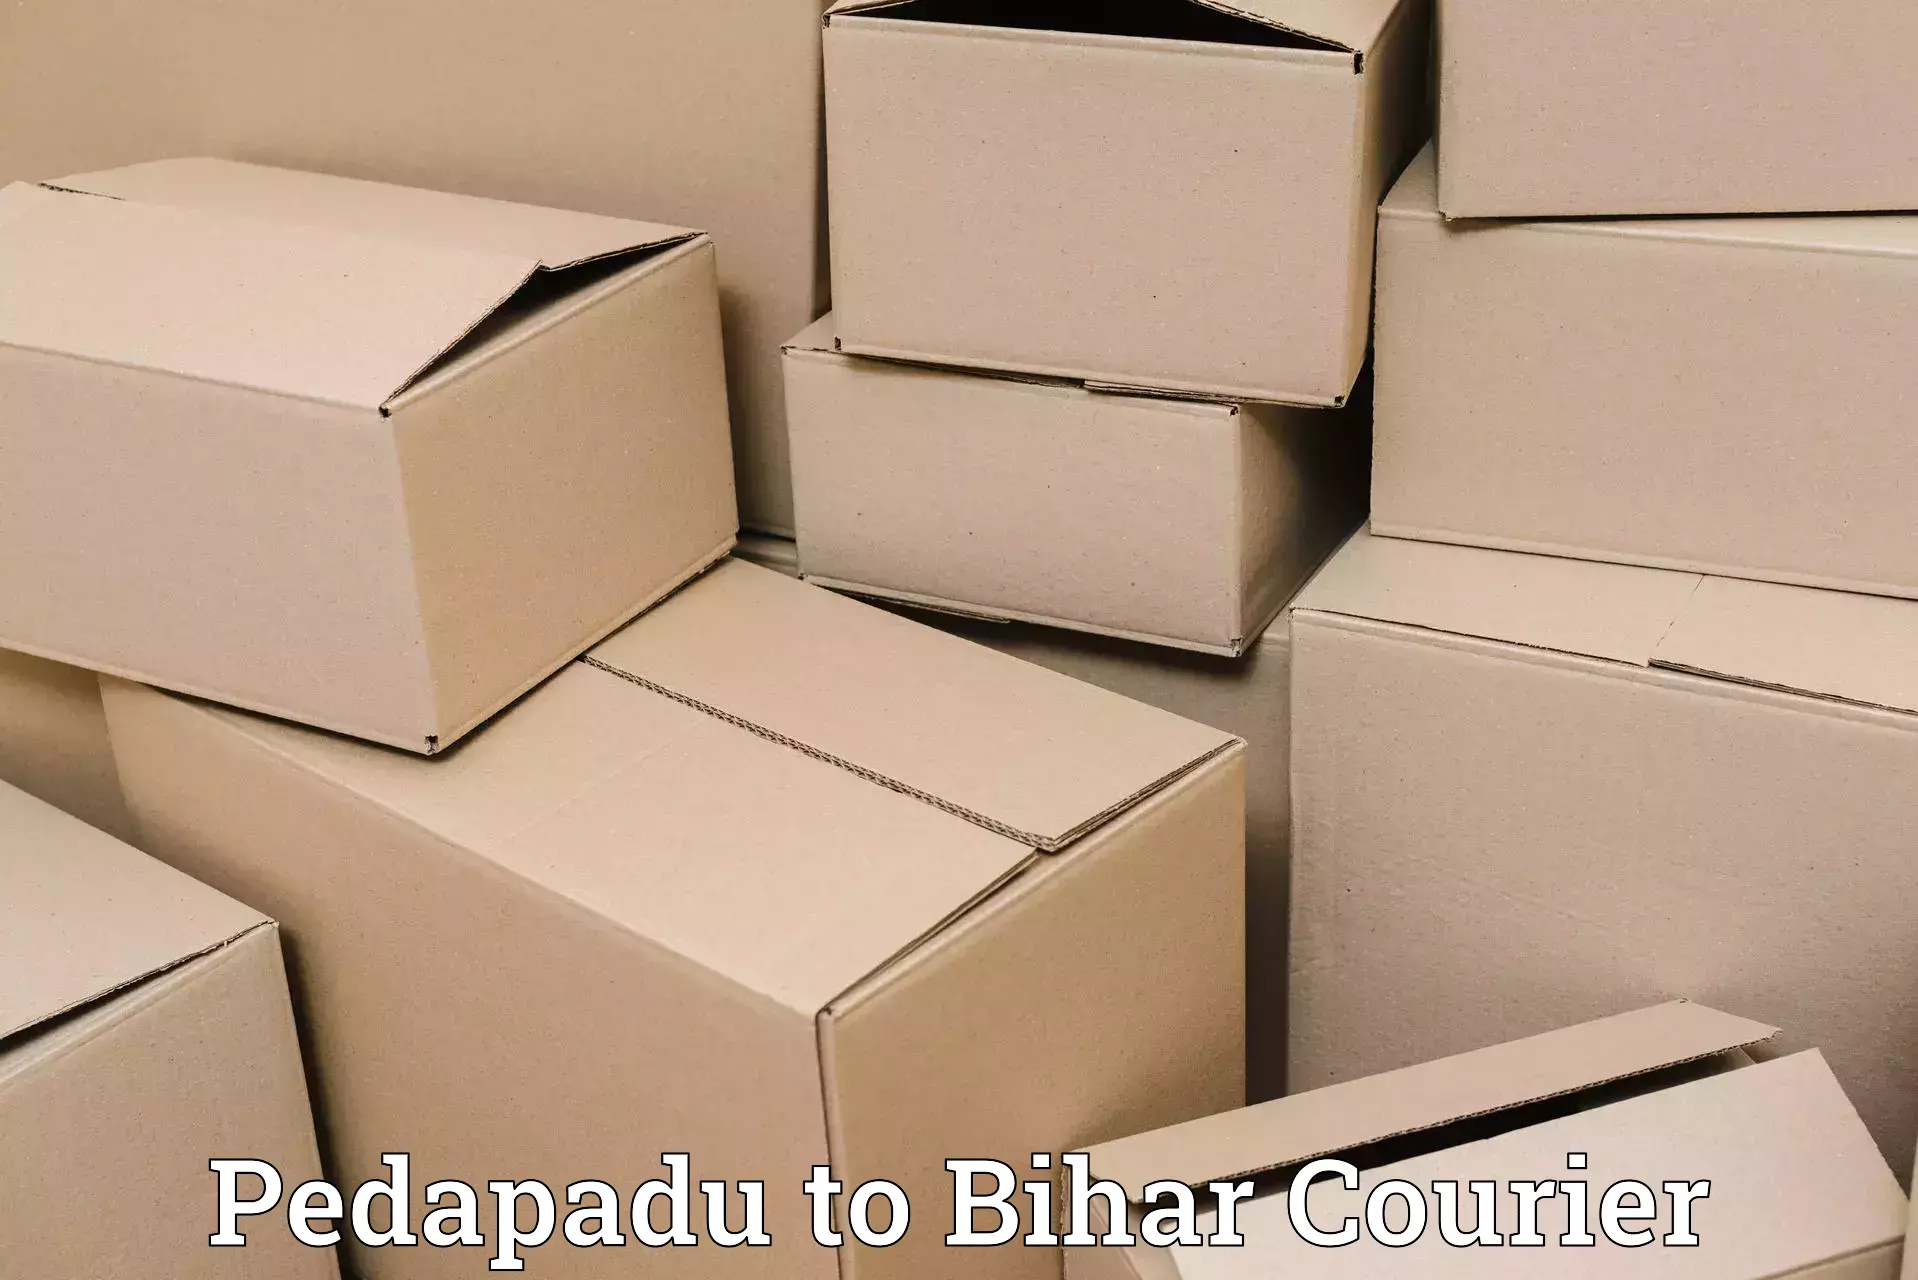 Pharmaceutical courier Pedapadu to Bakhtiarpur